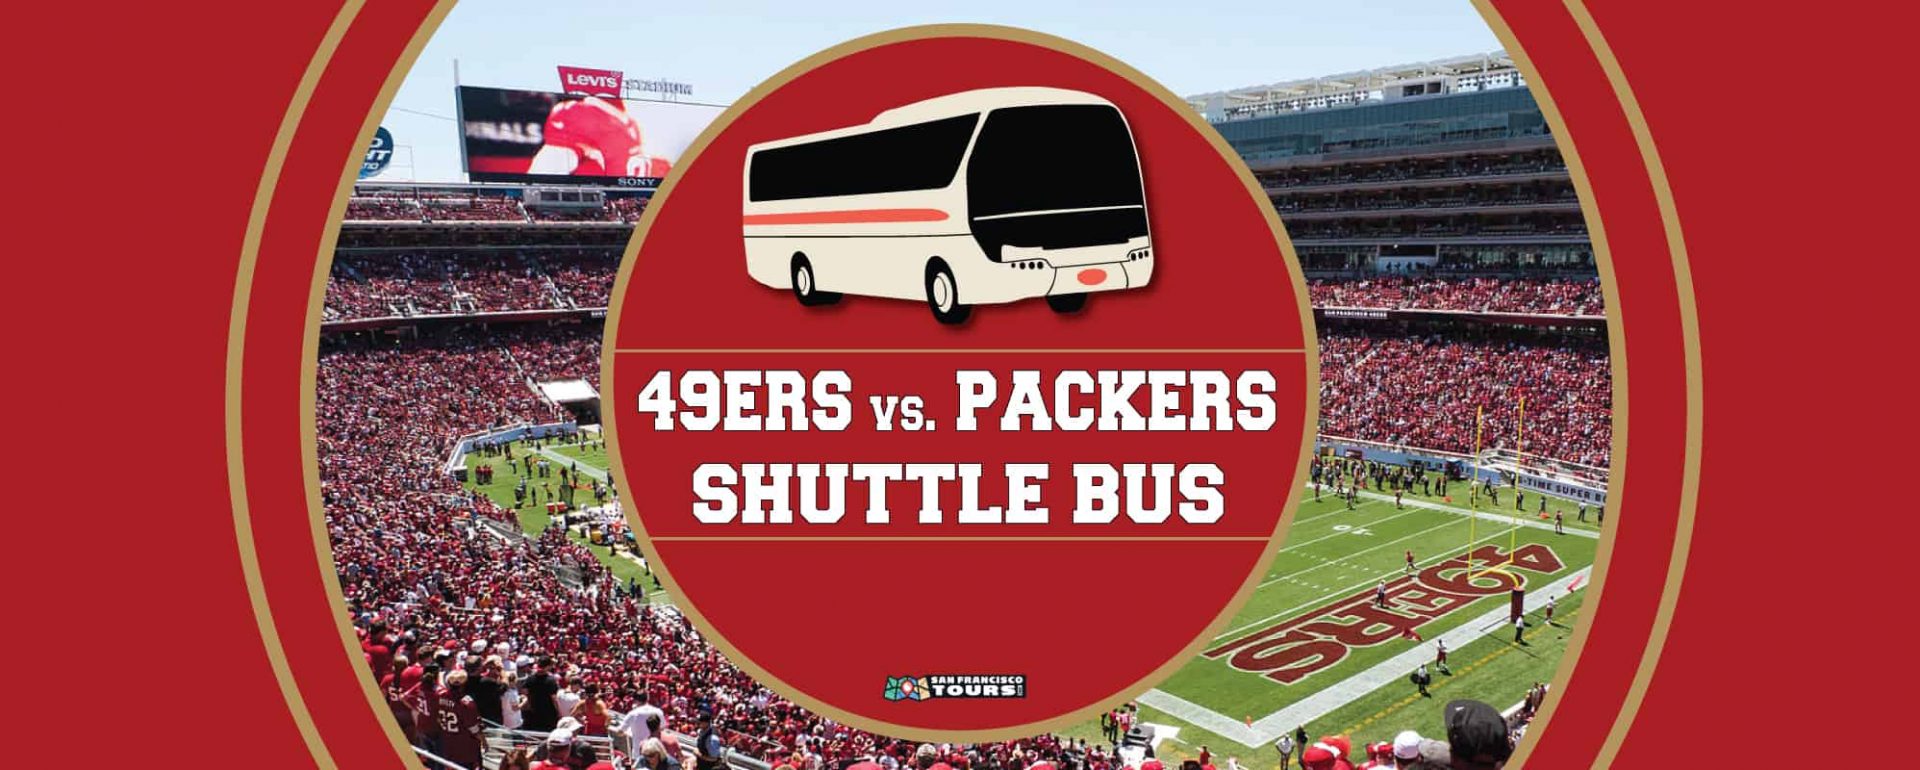 49ers vs. Packers Shuttle Bus